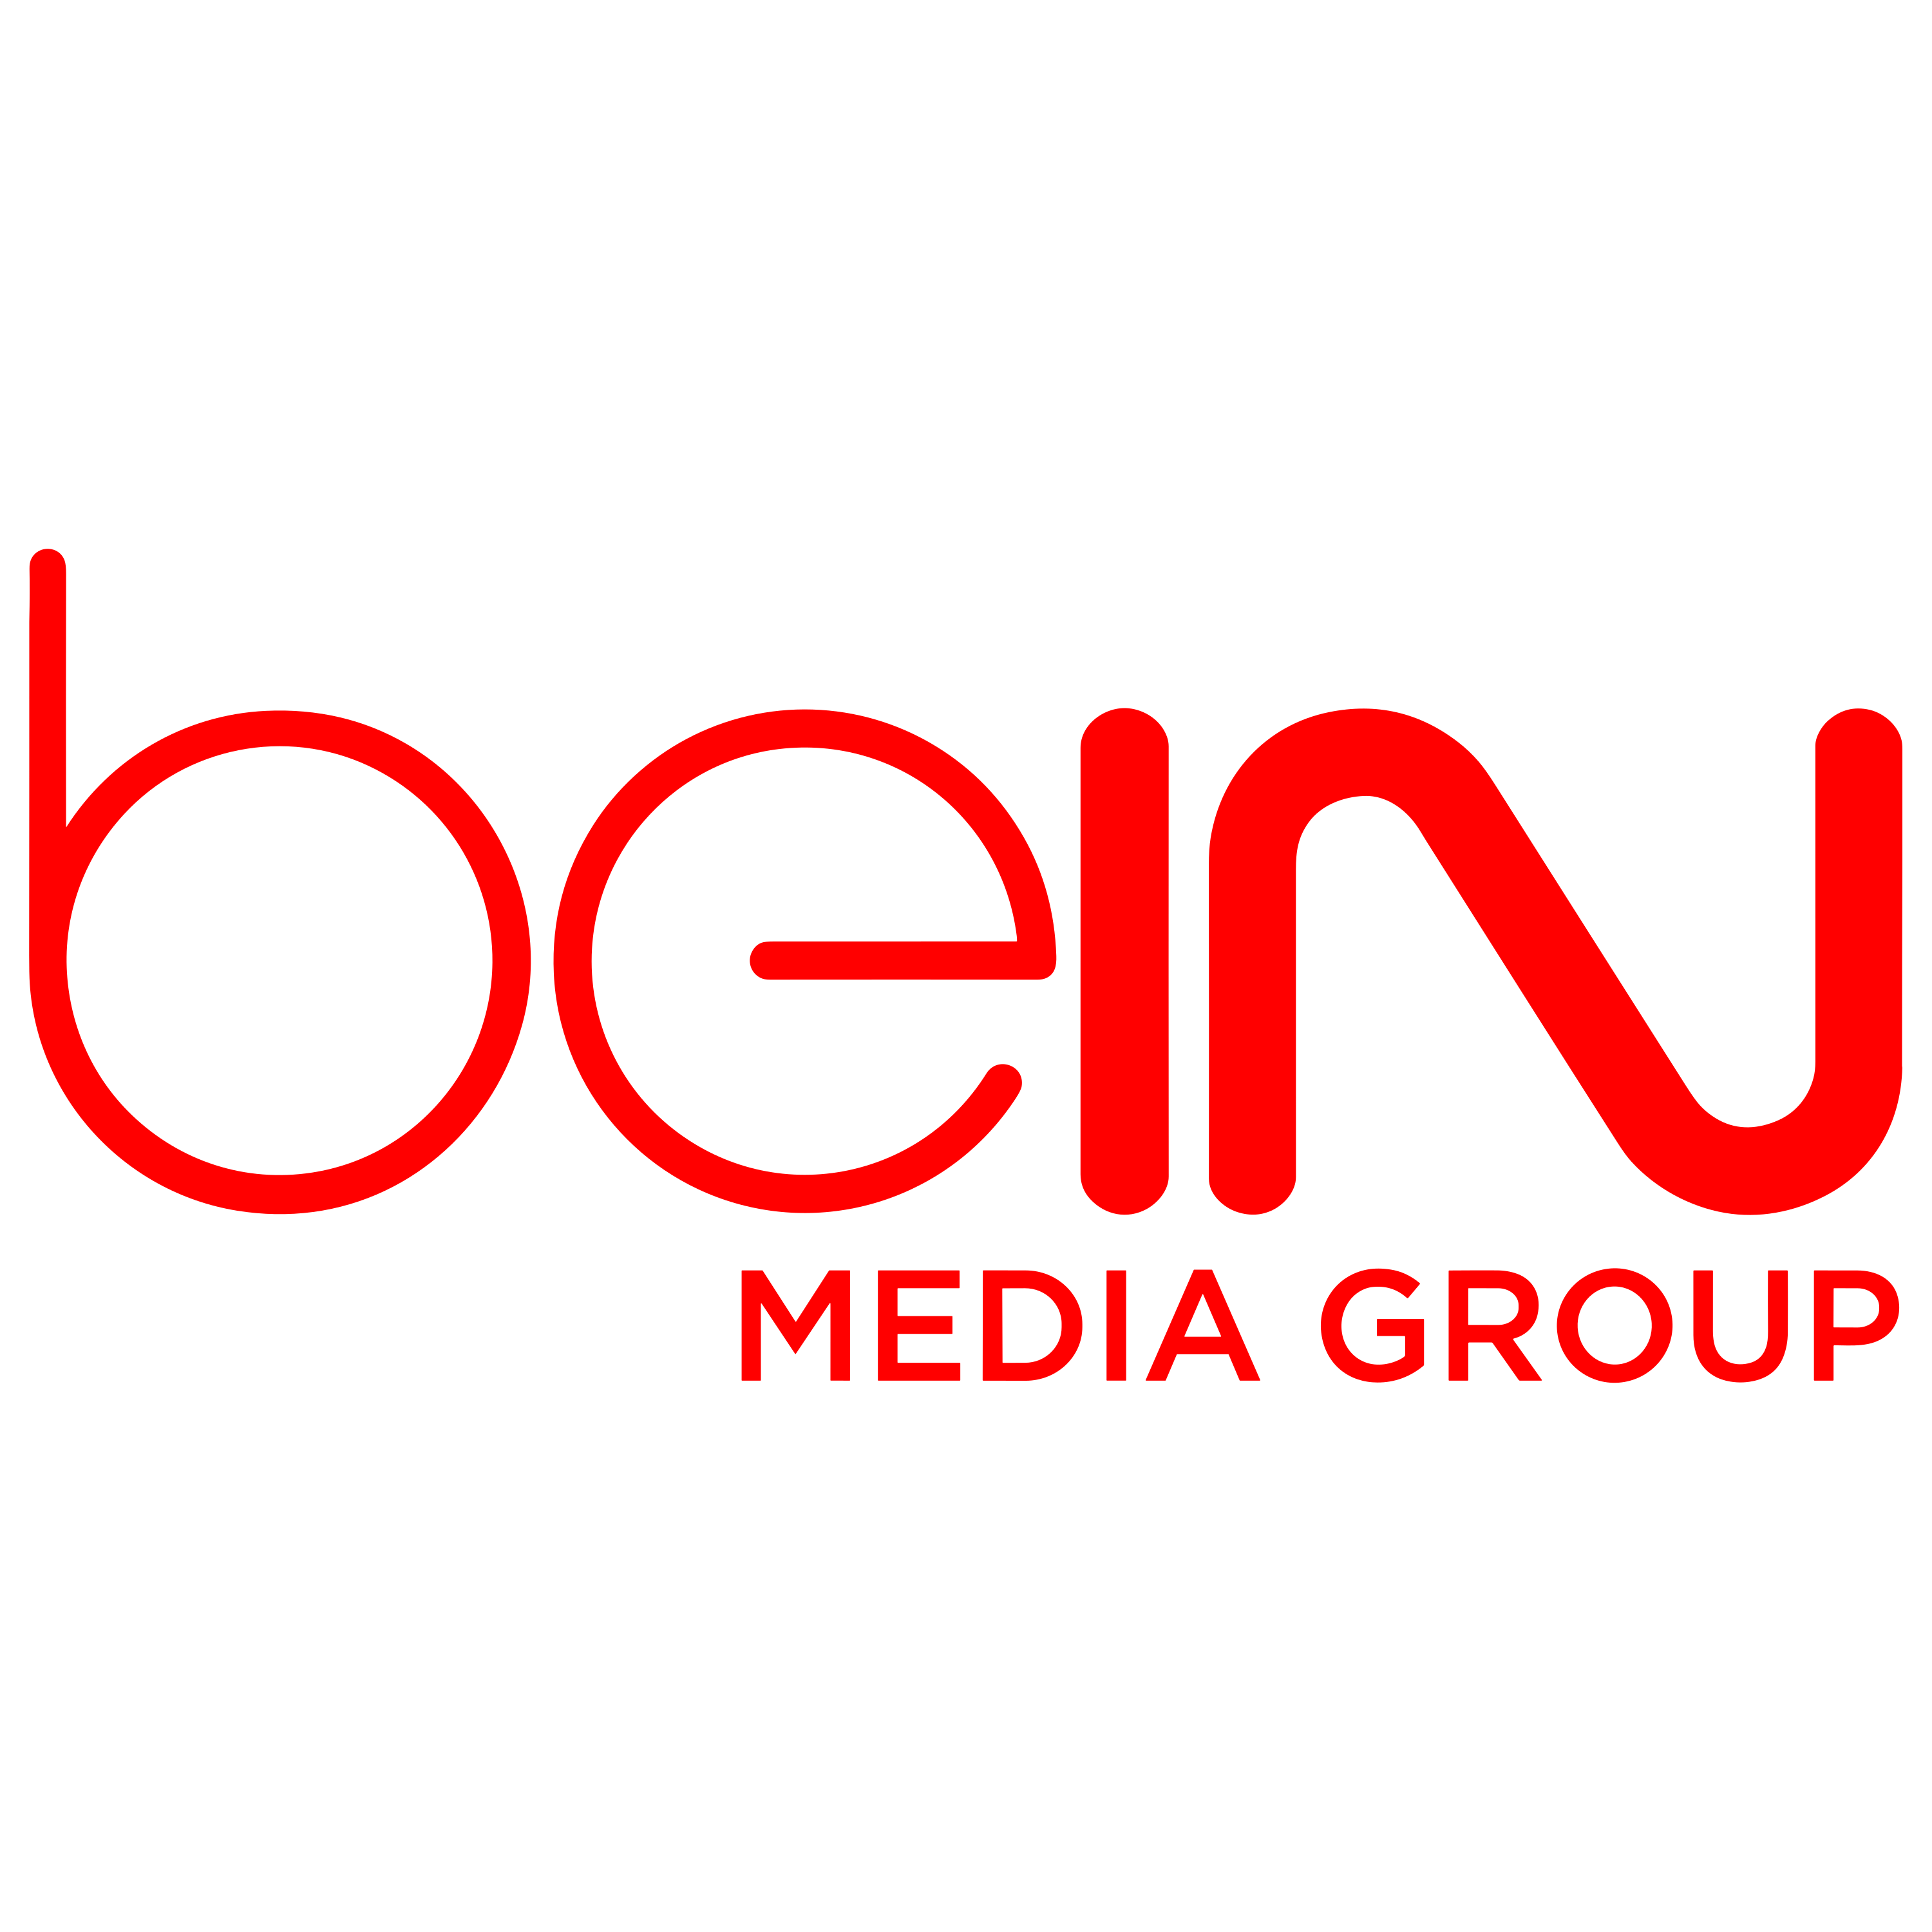 Bein Mediagroup Logo  Transparent Gallery